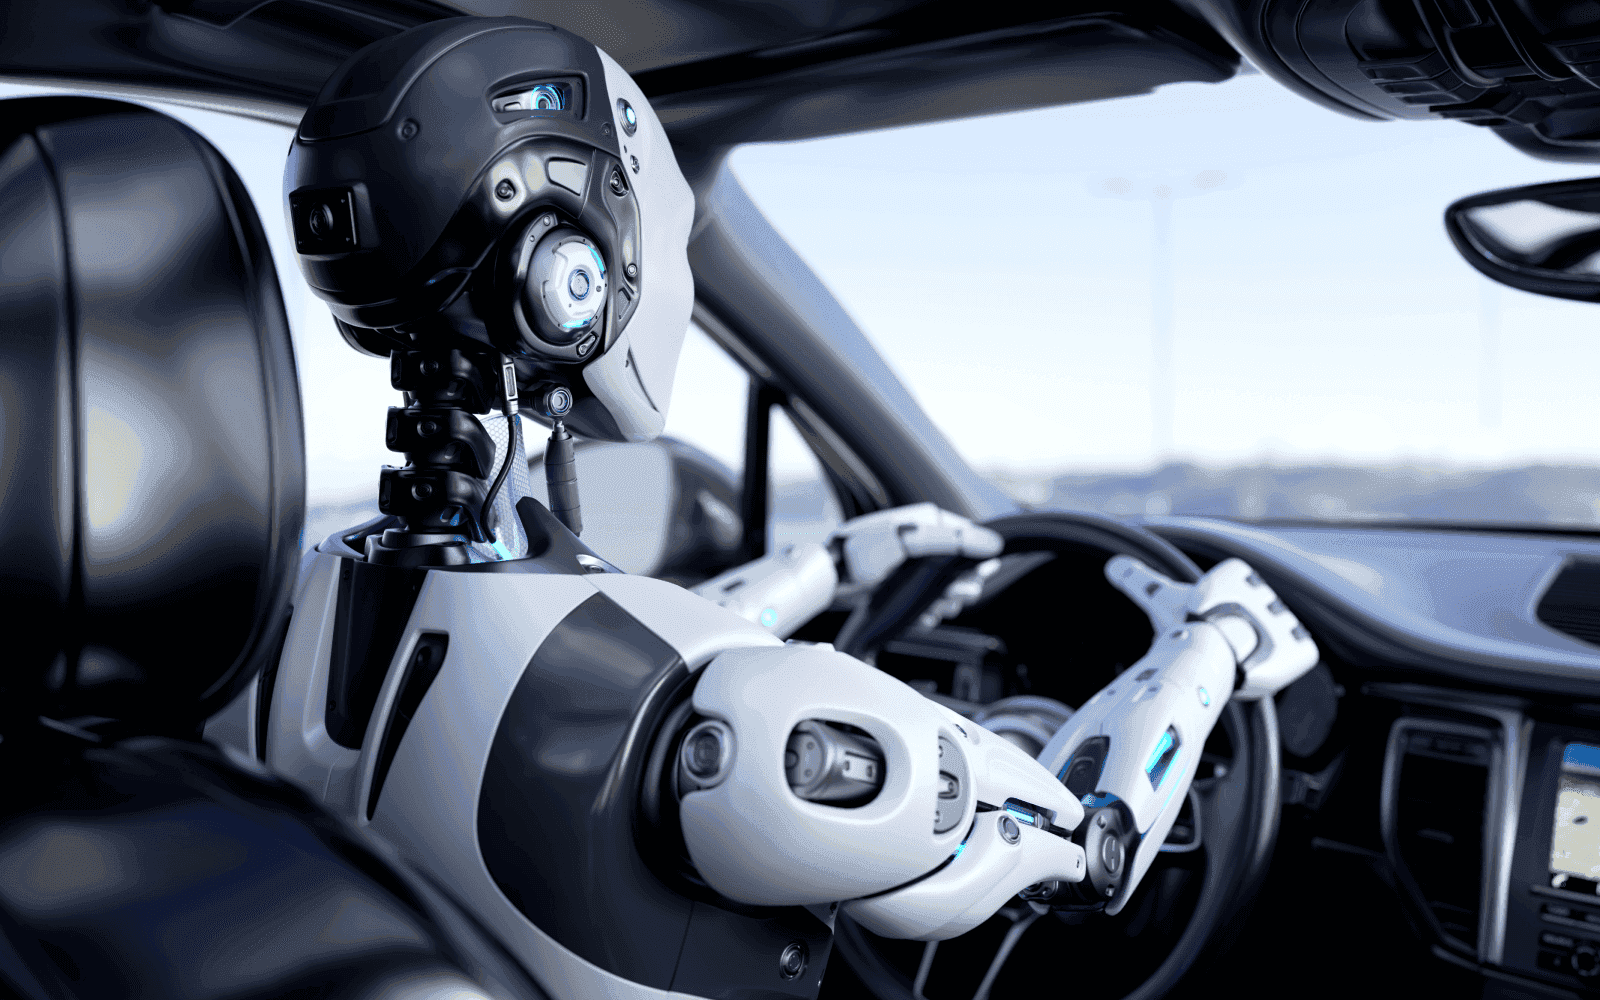 AI in autonomous cars